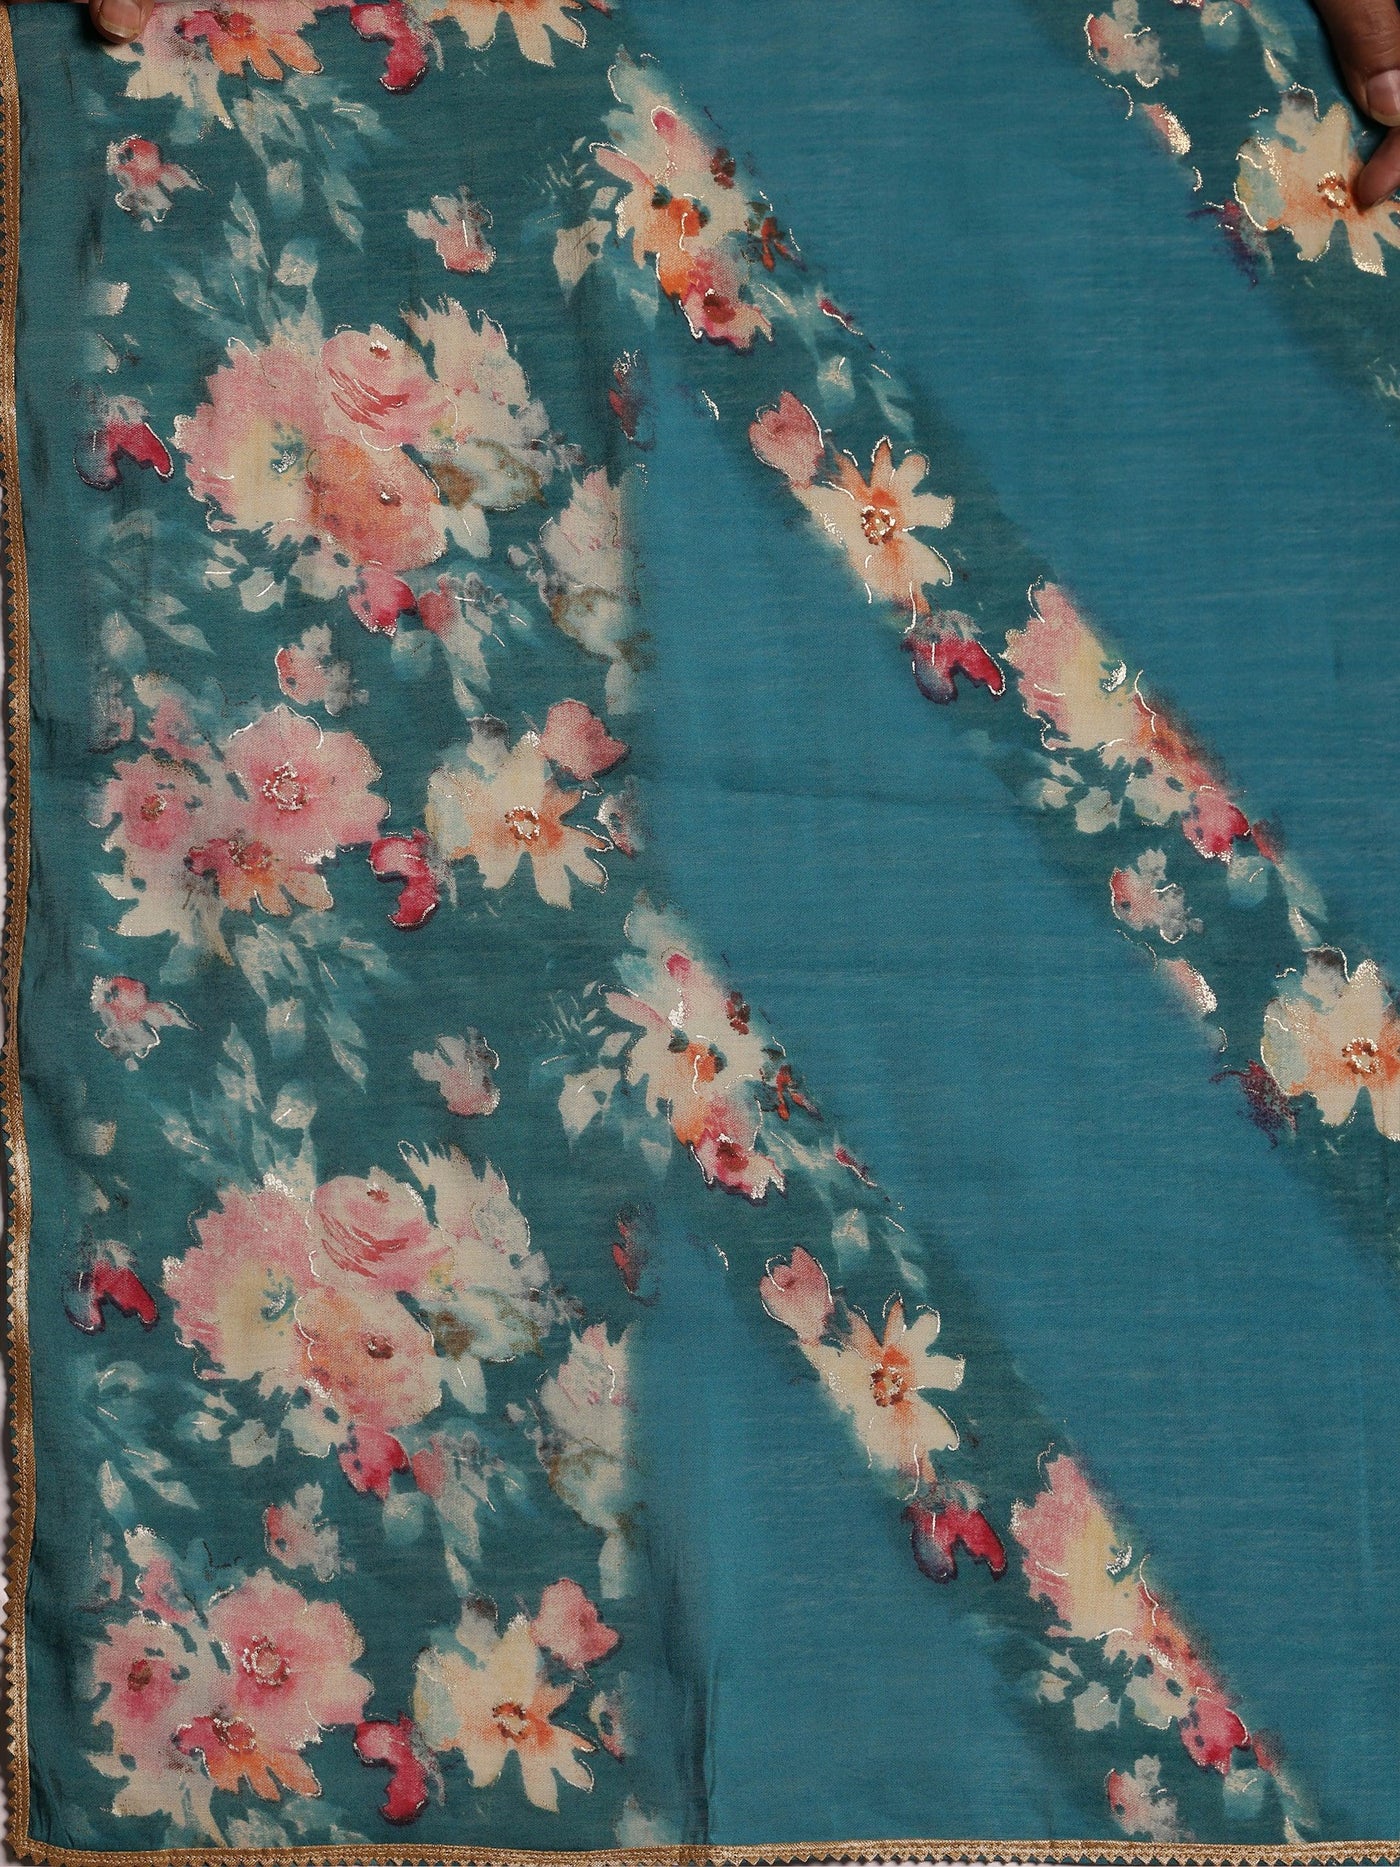 Blue Printed Silk Blend Anarkali Suit With Dupatta - Libas